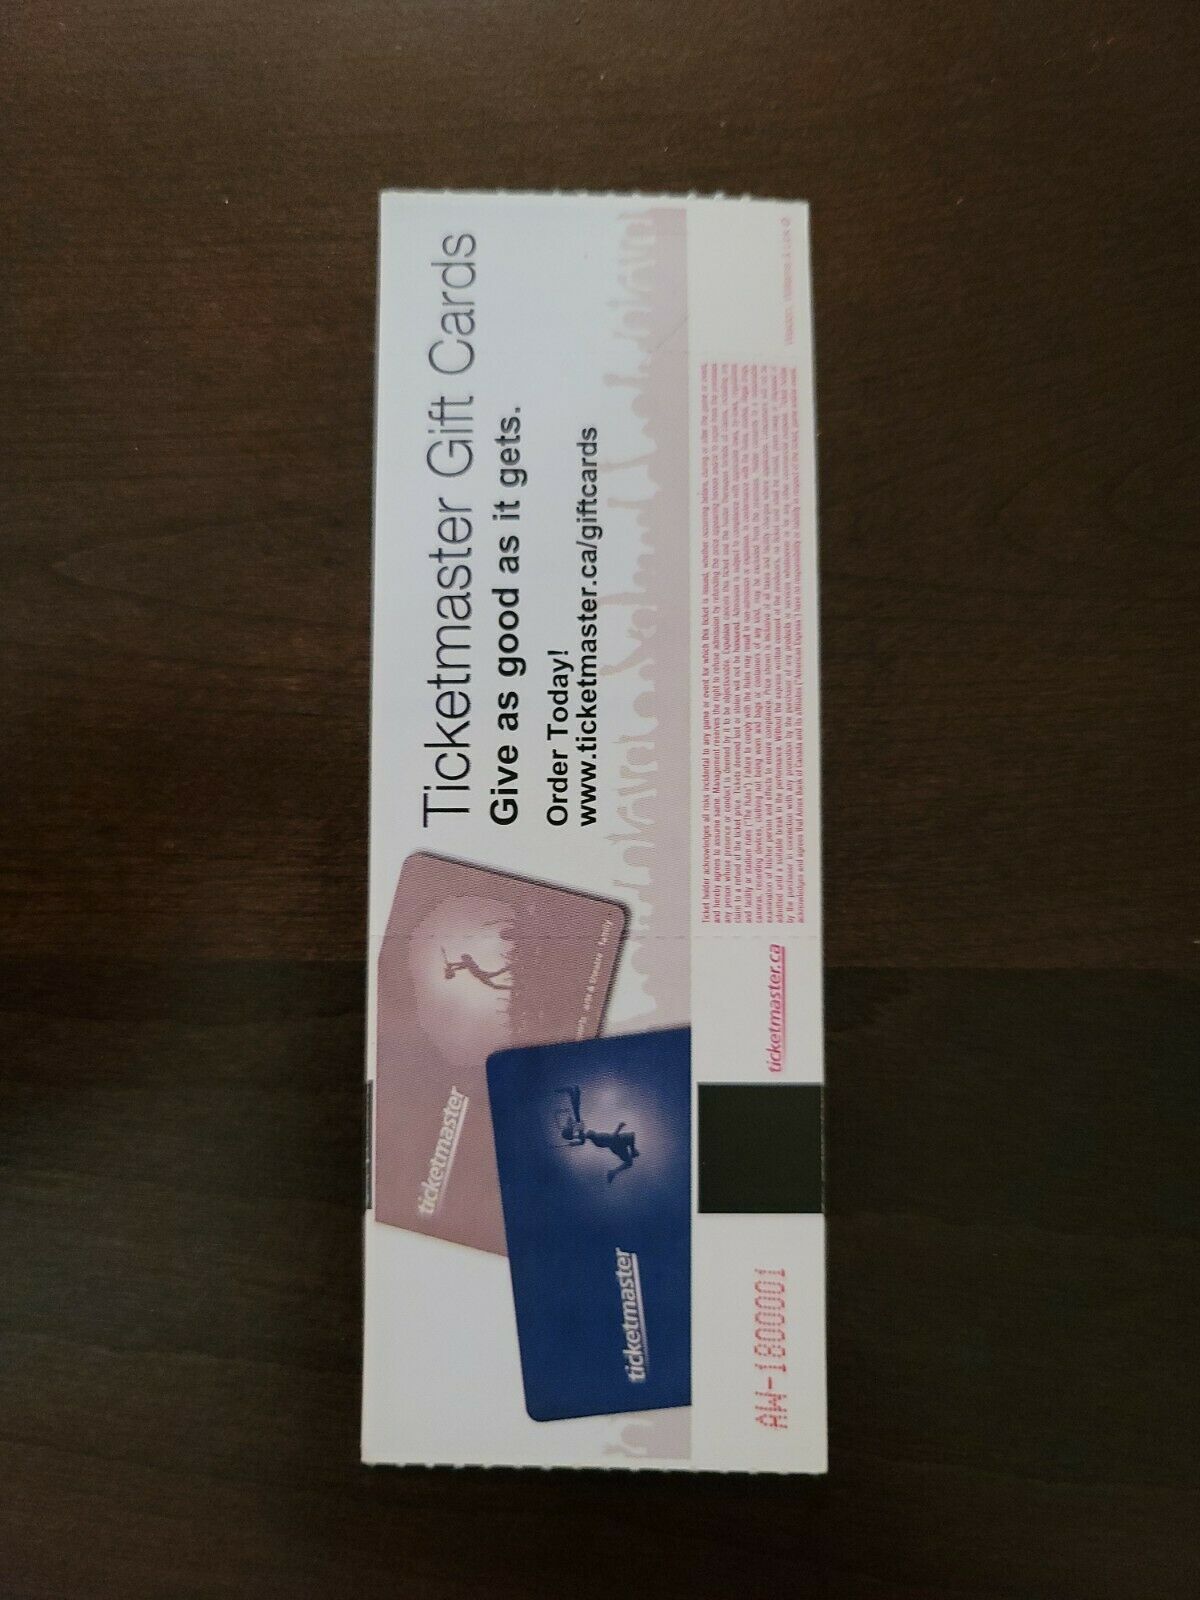 Justin Bieber 2017, Toronto Rogers Centre Original Concert Ticket Stub